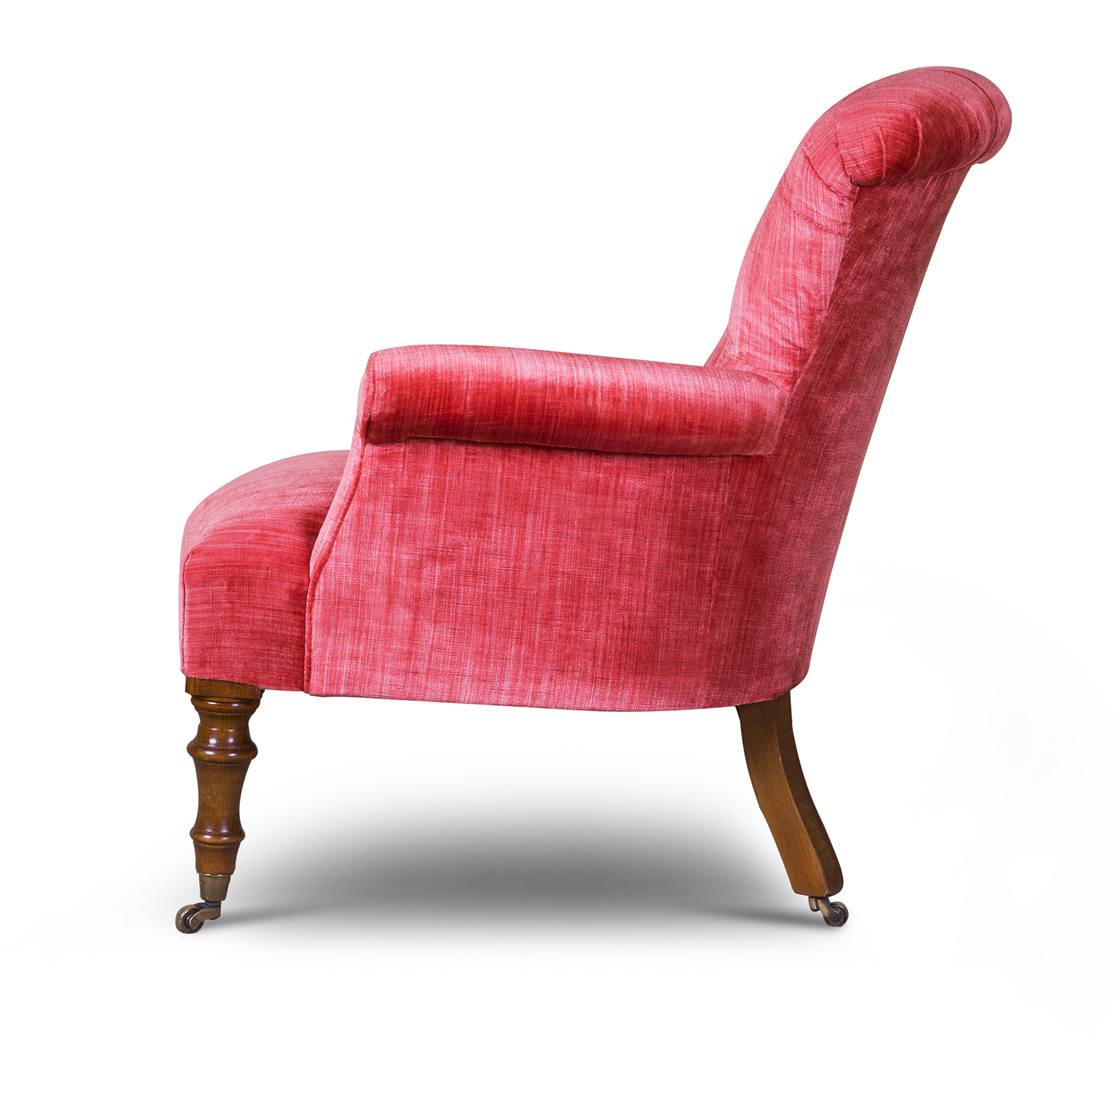 Victorian chair in Como silk velvet - Pompeiian red - Beaumont & Fletcher